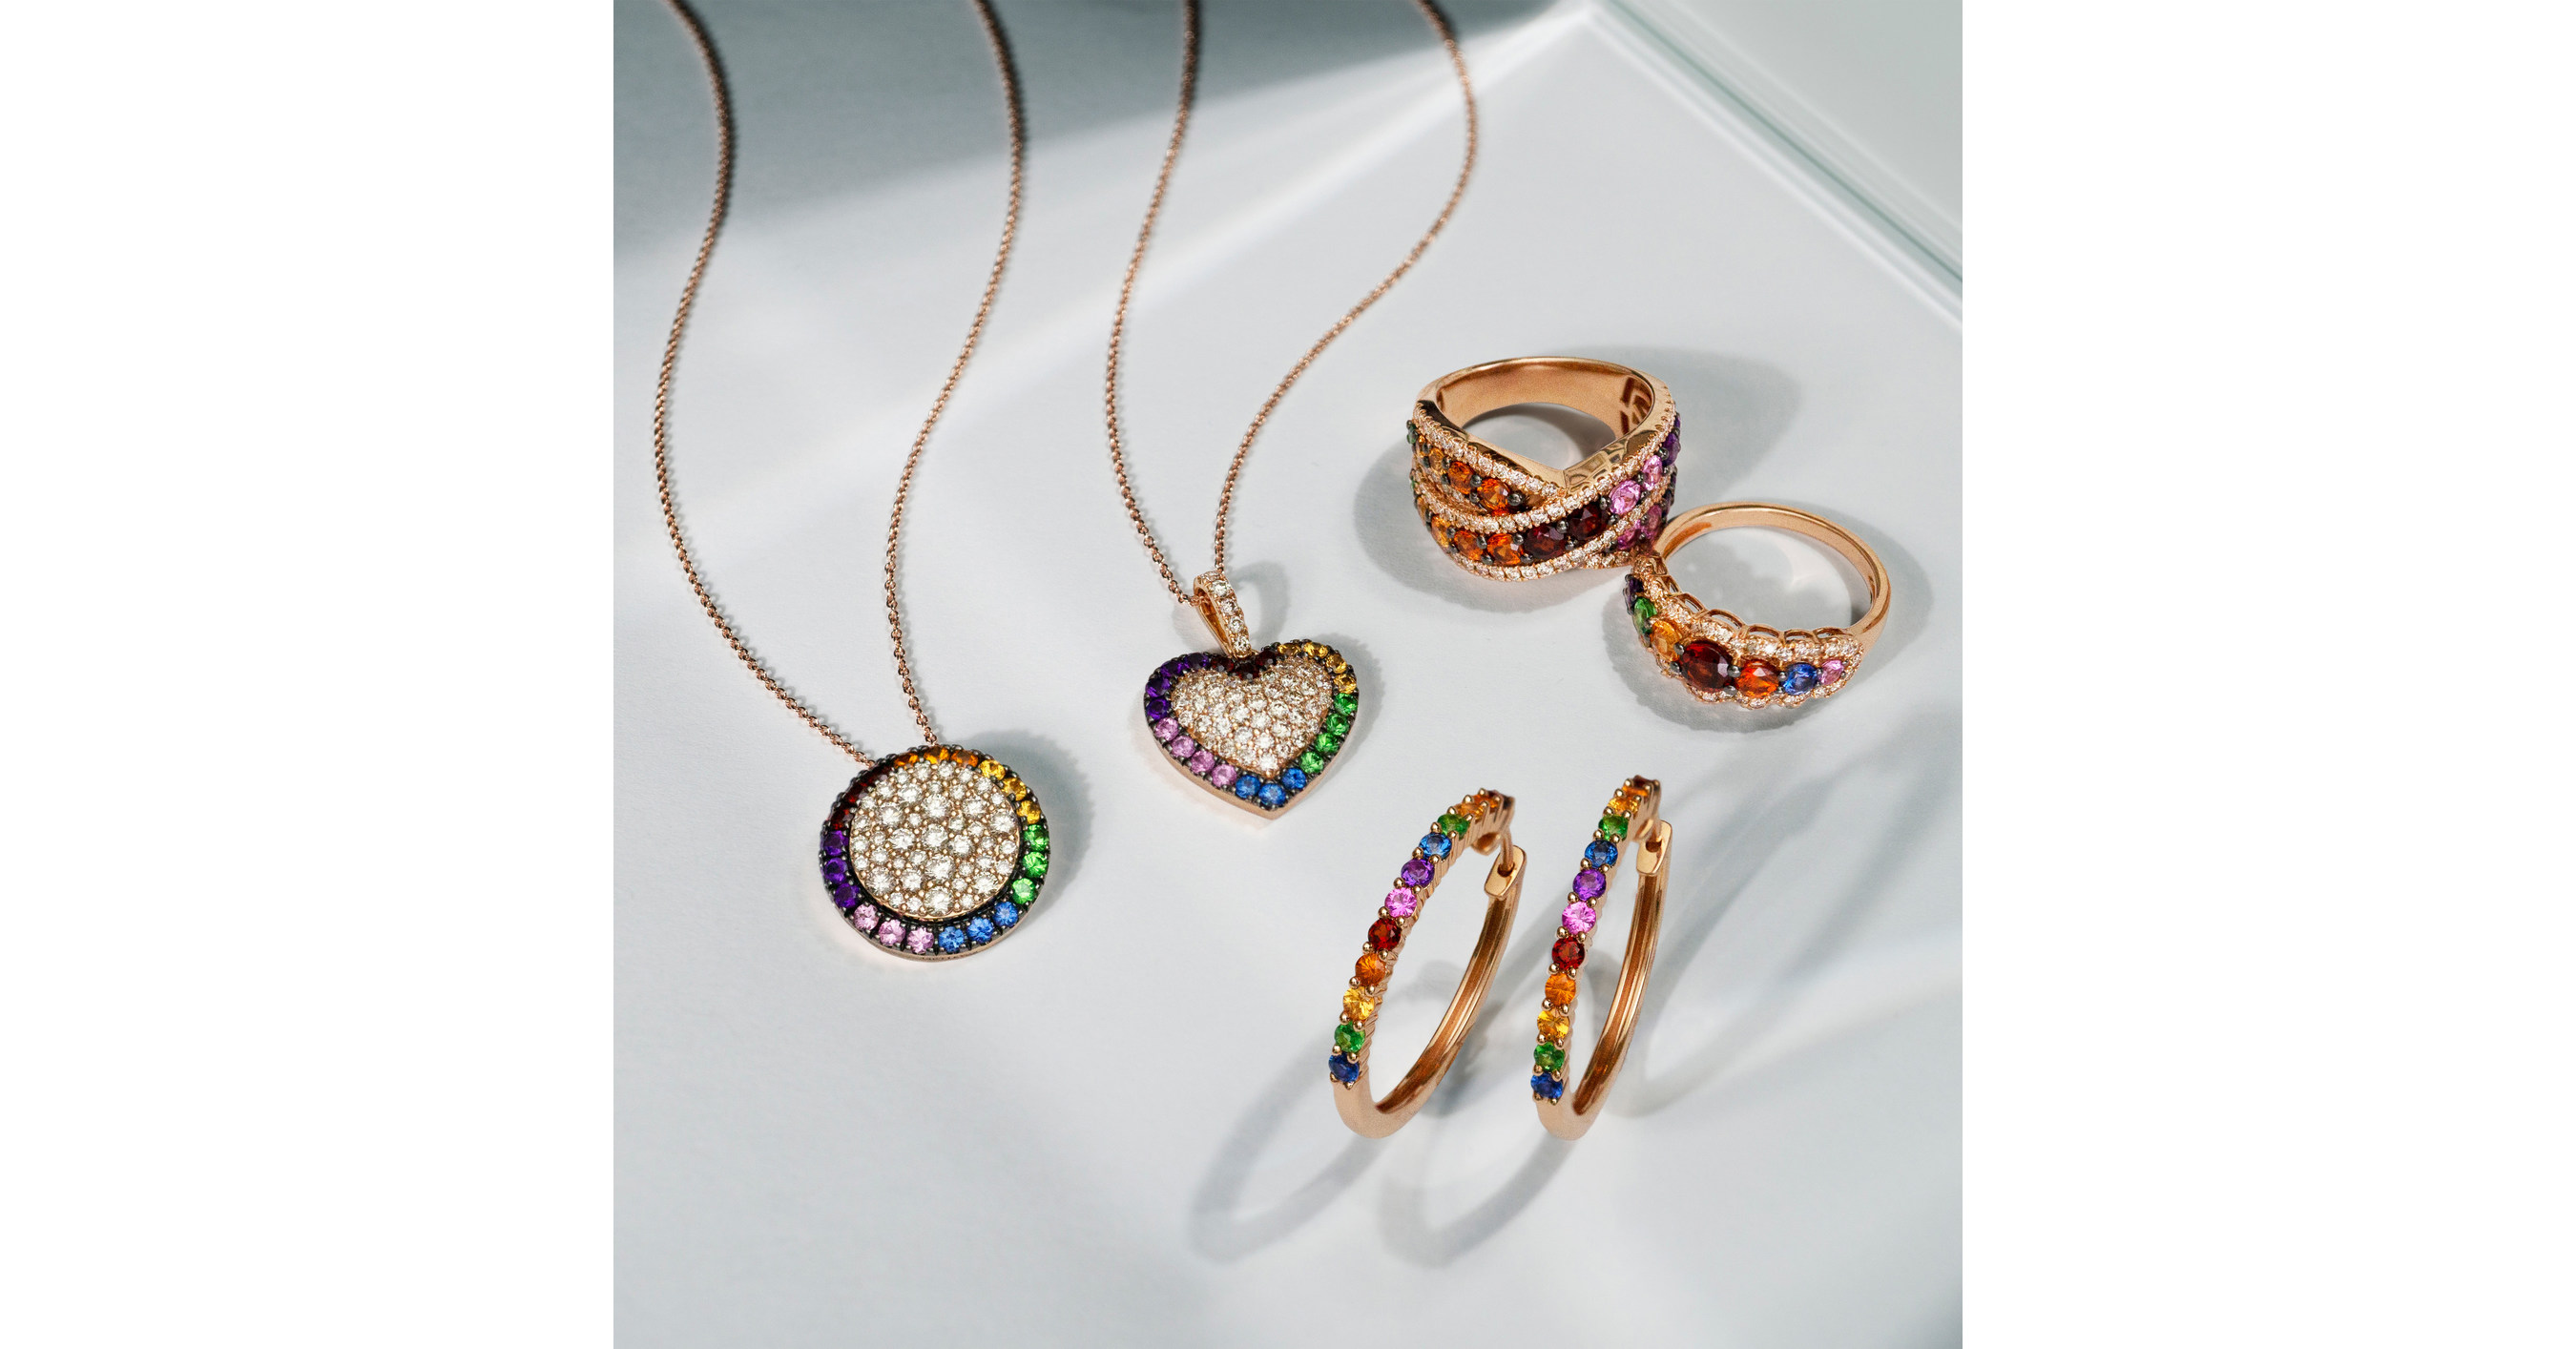 Le Vian Unveils 7 Key Jewelry Trends for 2023, the Centurion